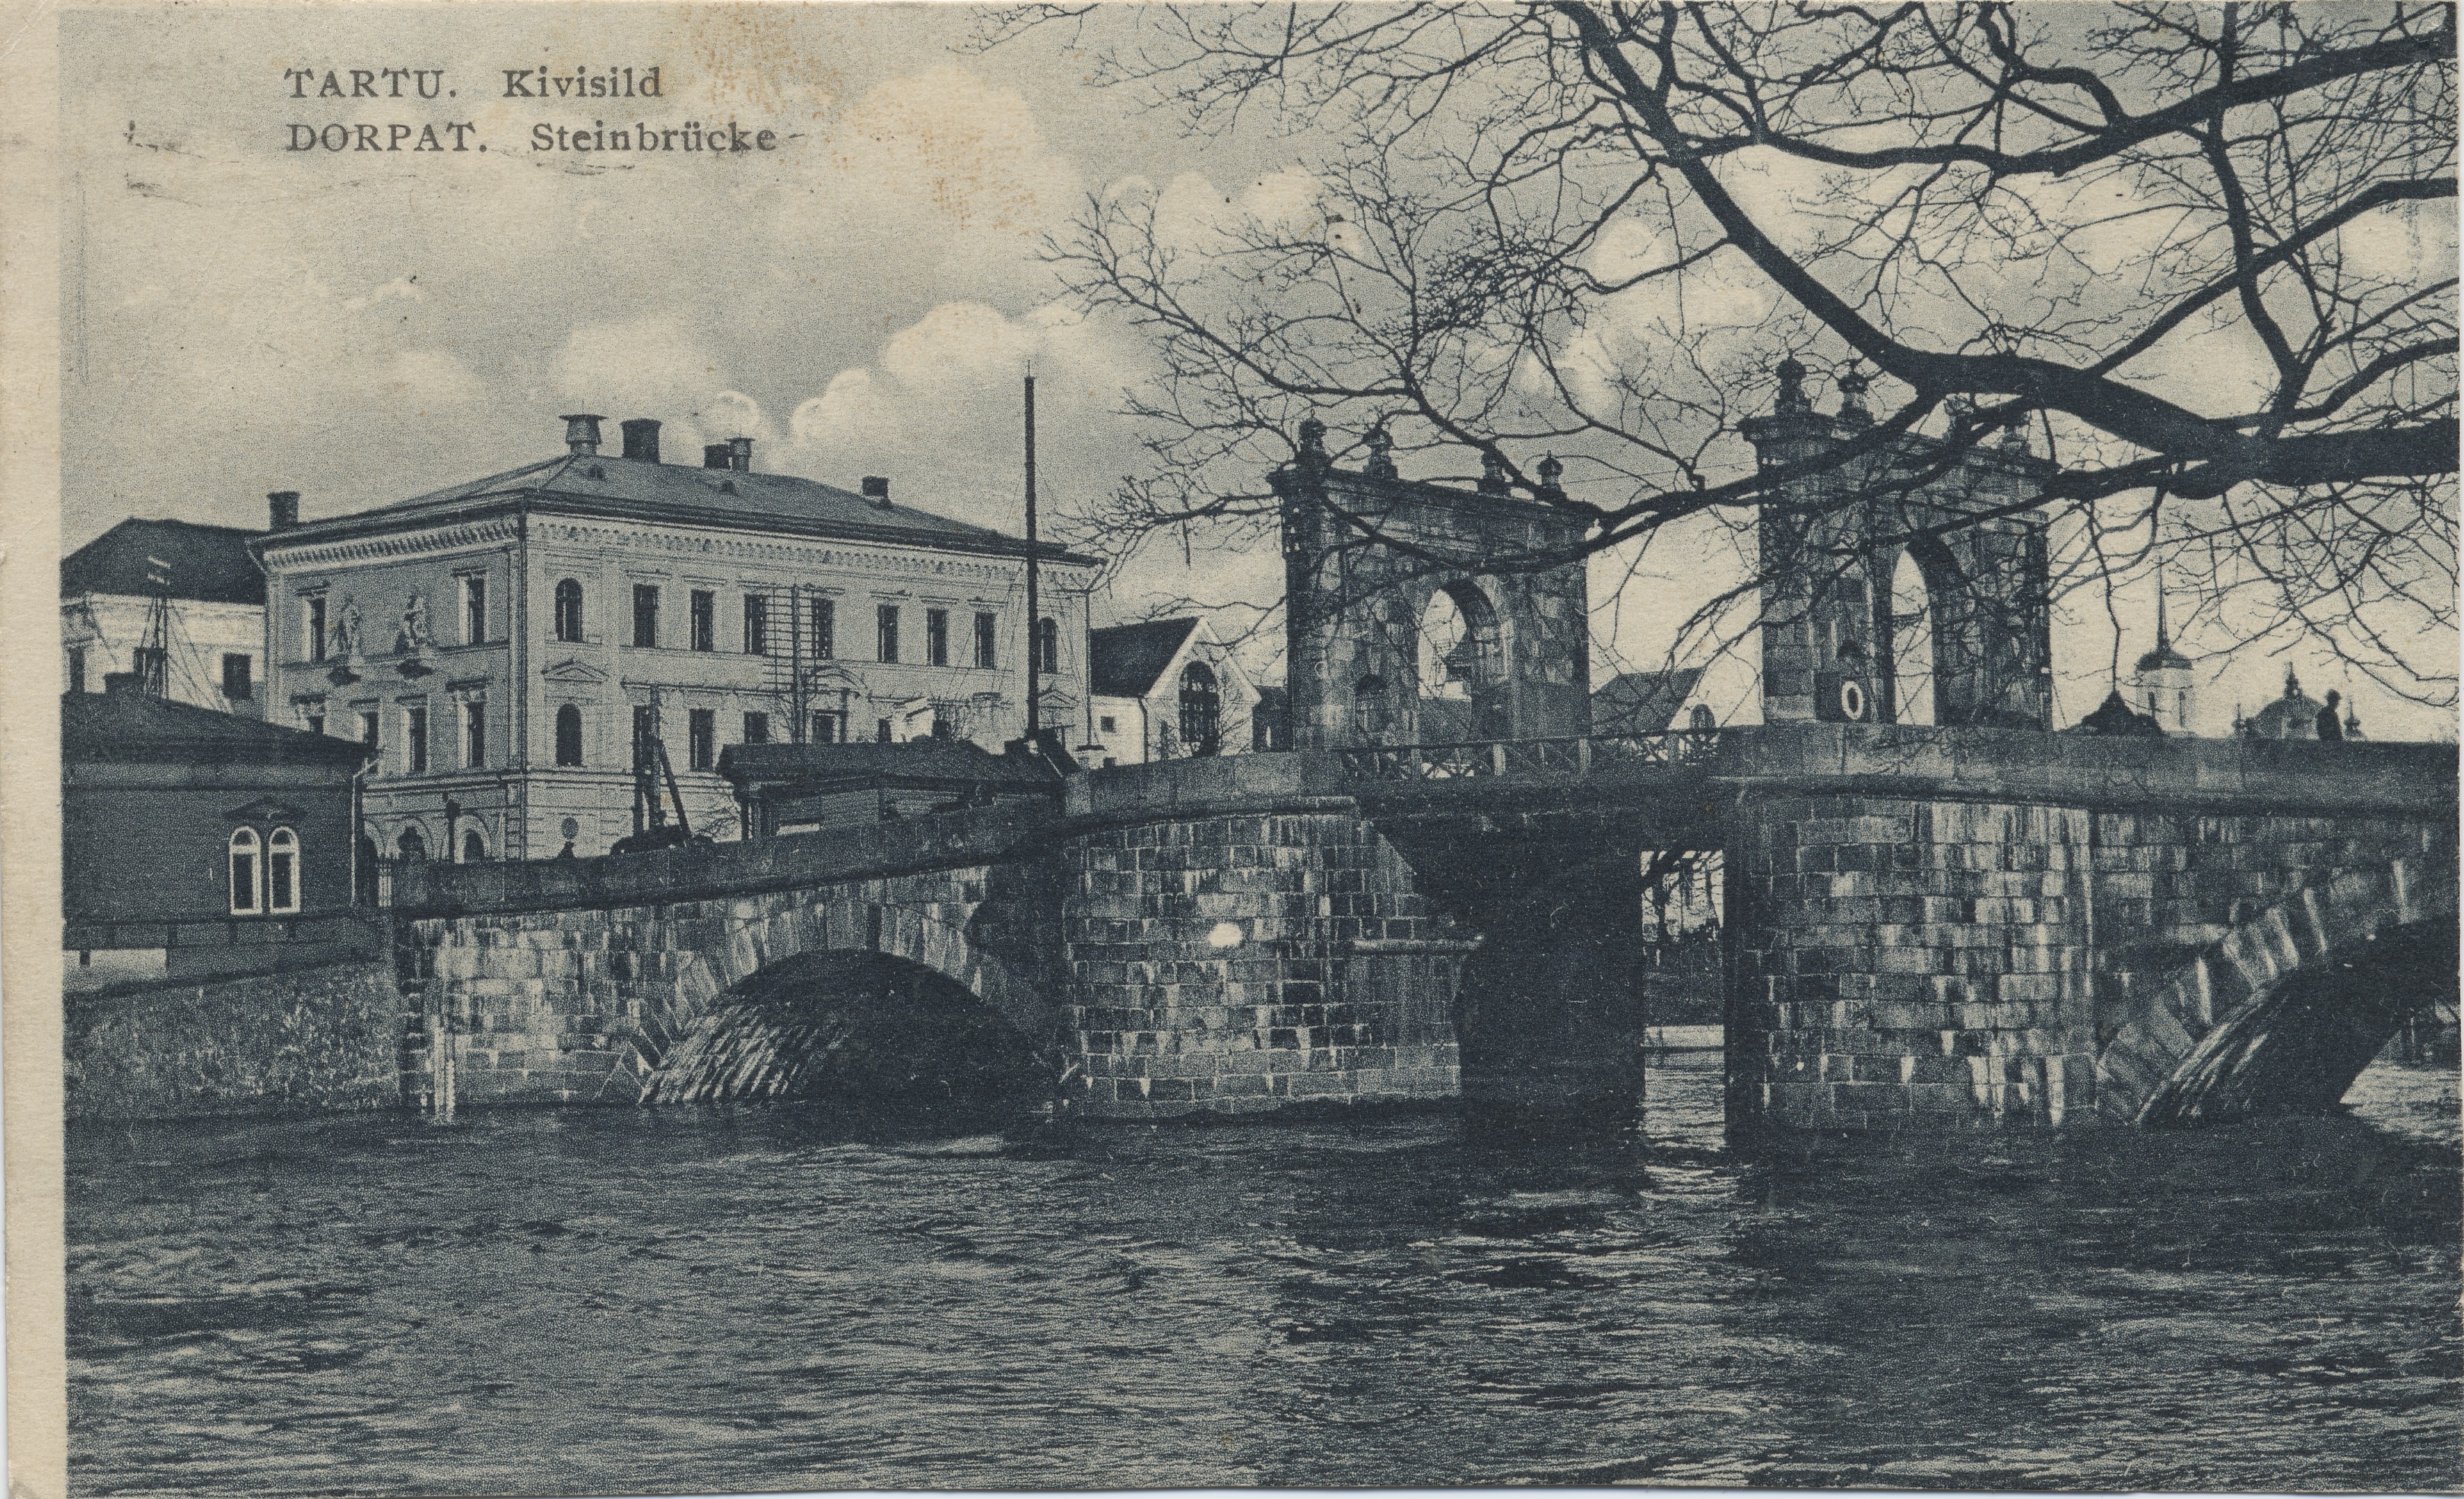 Tartu : stone sild = Dorpat : Stein bridge